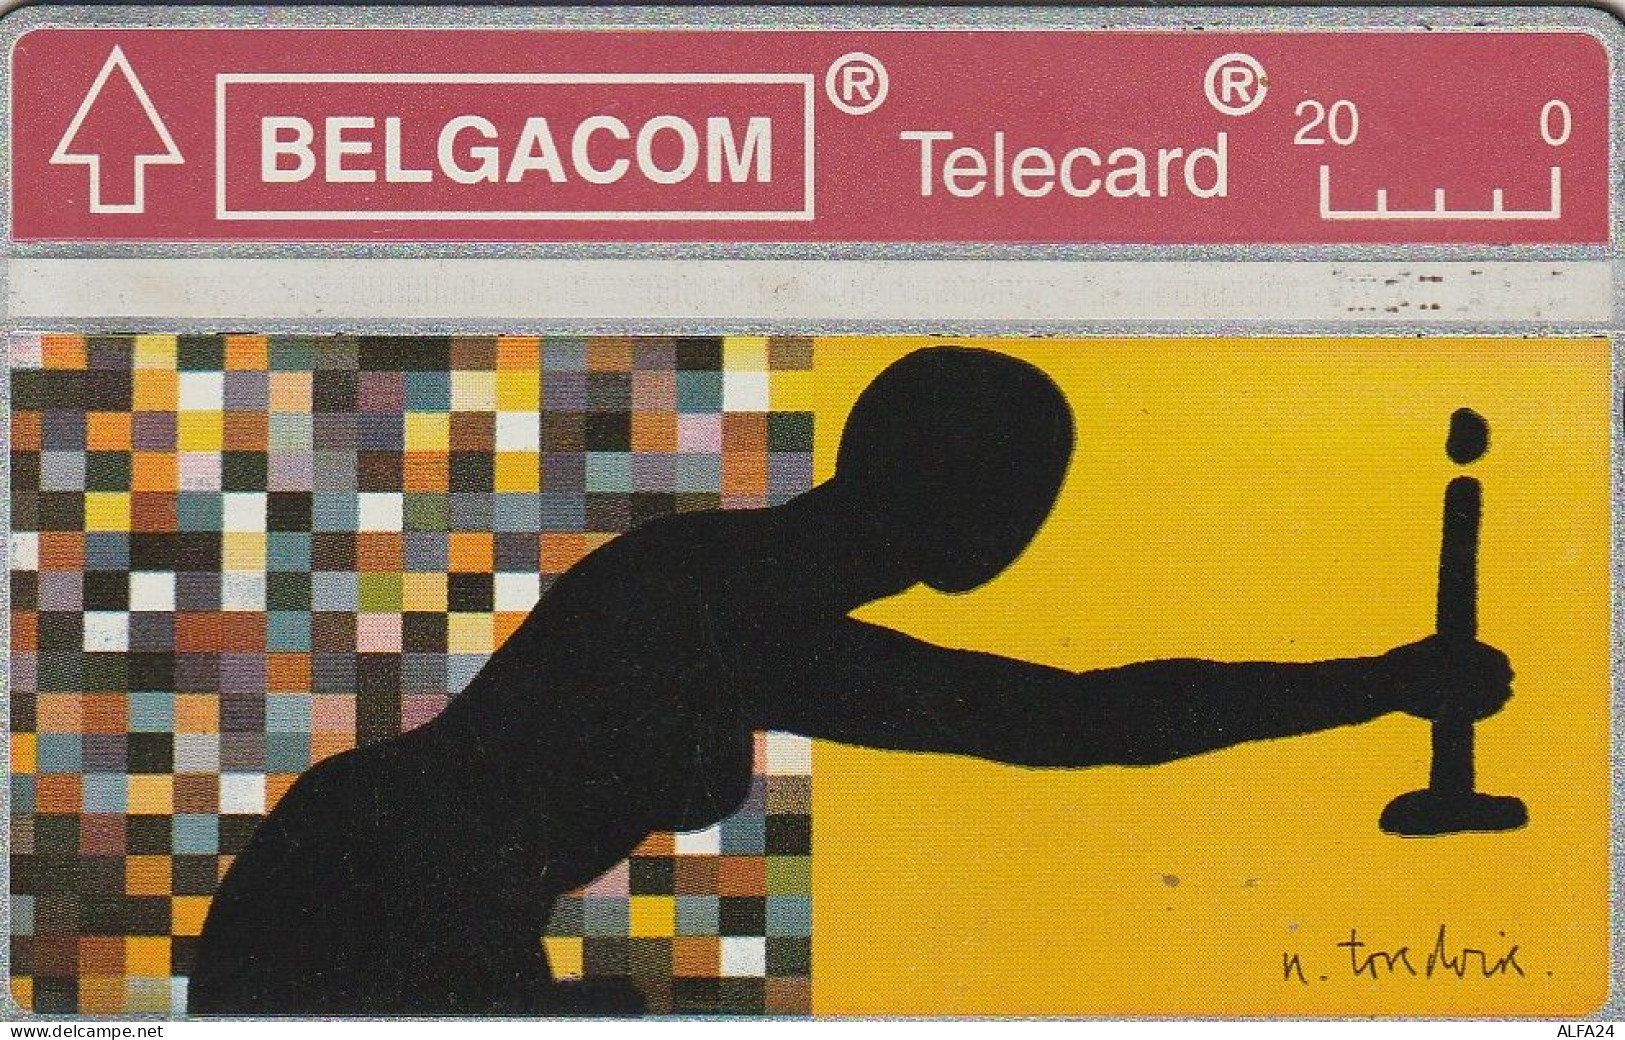 PHONE CARD BELGIO LG (CV6609 - Senza Chip